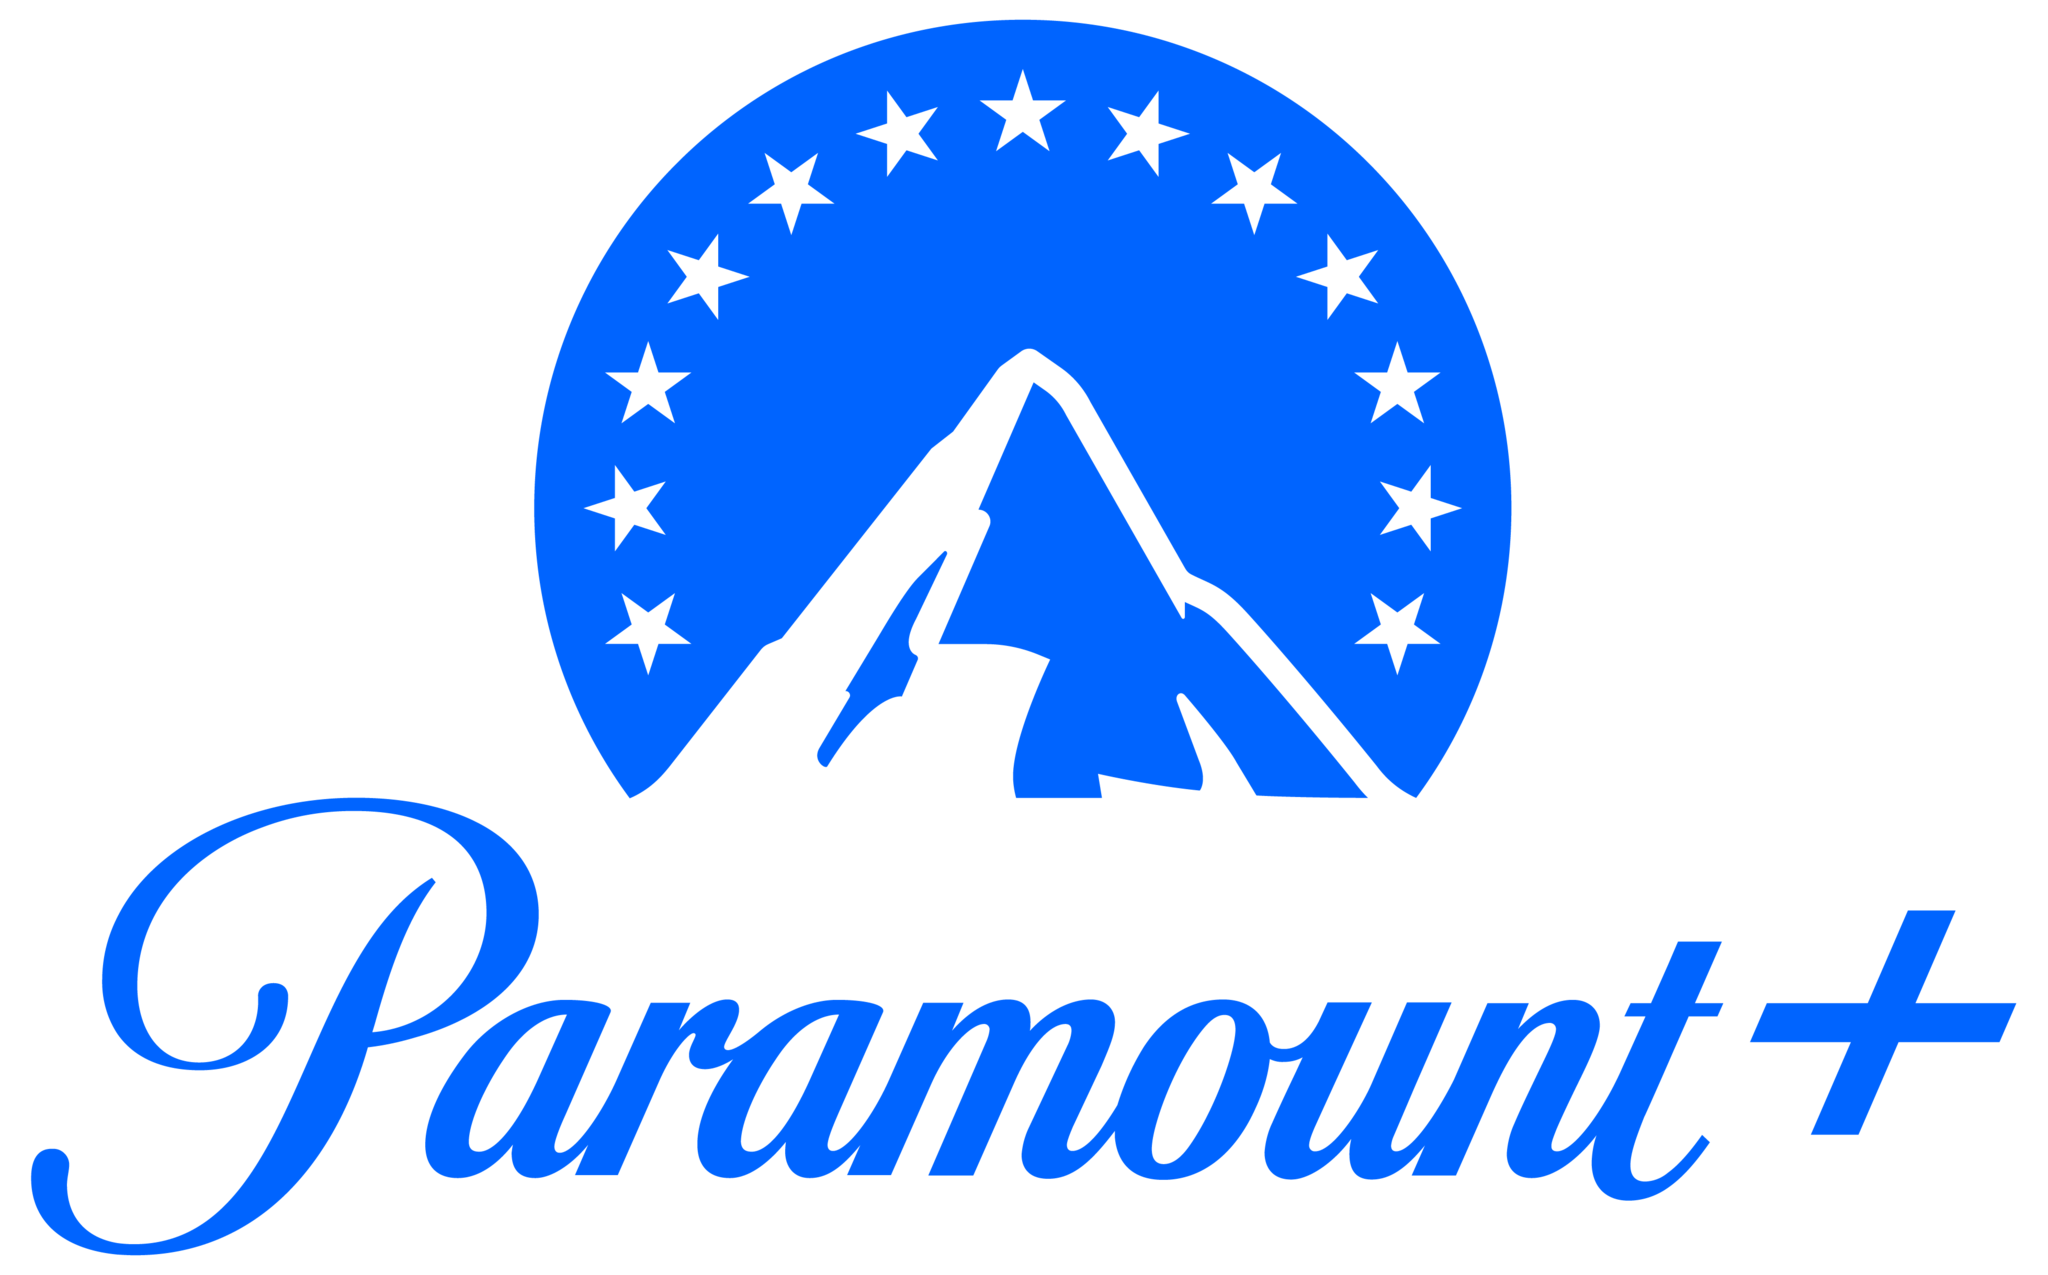 Paramount More